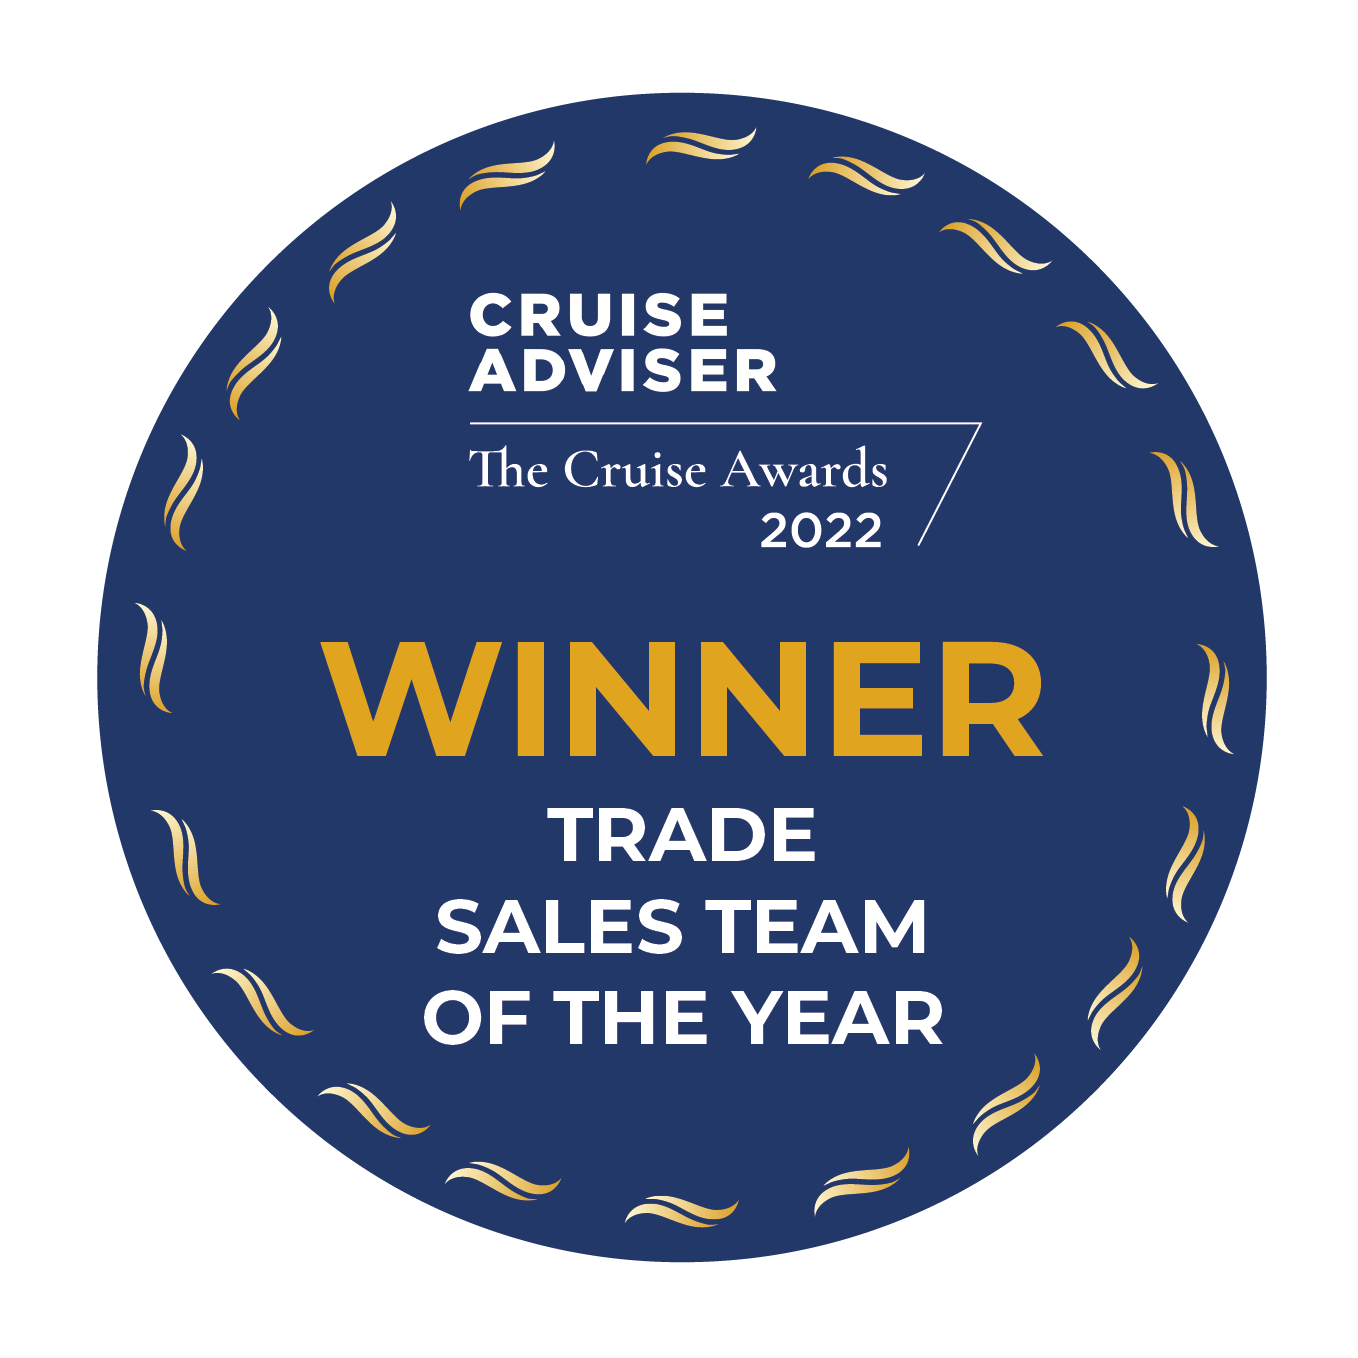 Cruise Adviser award logo